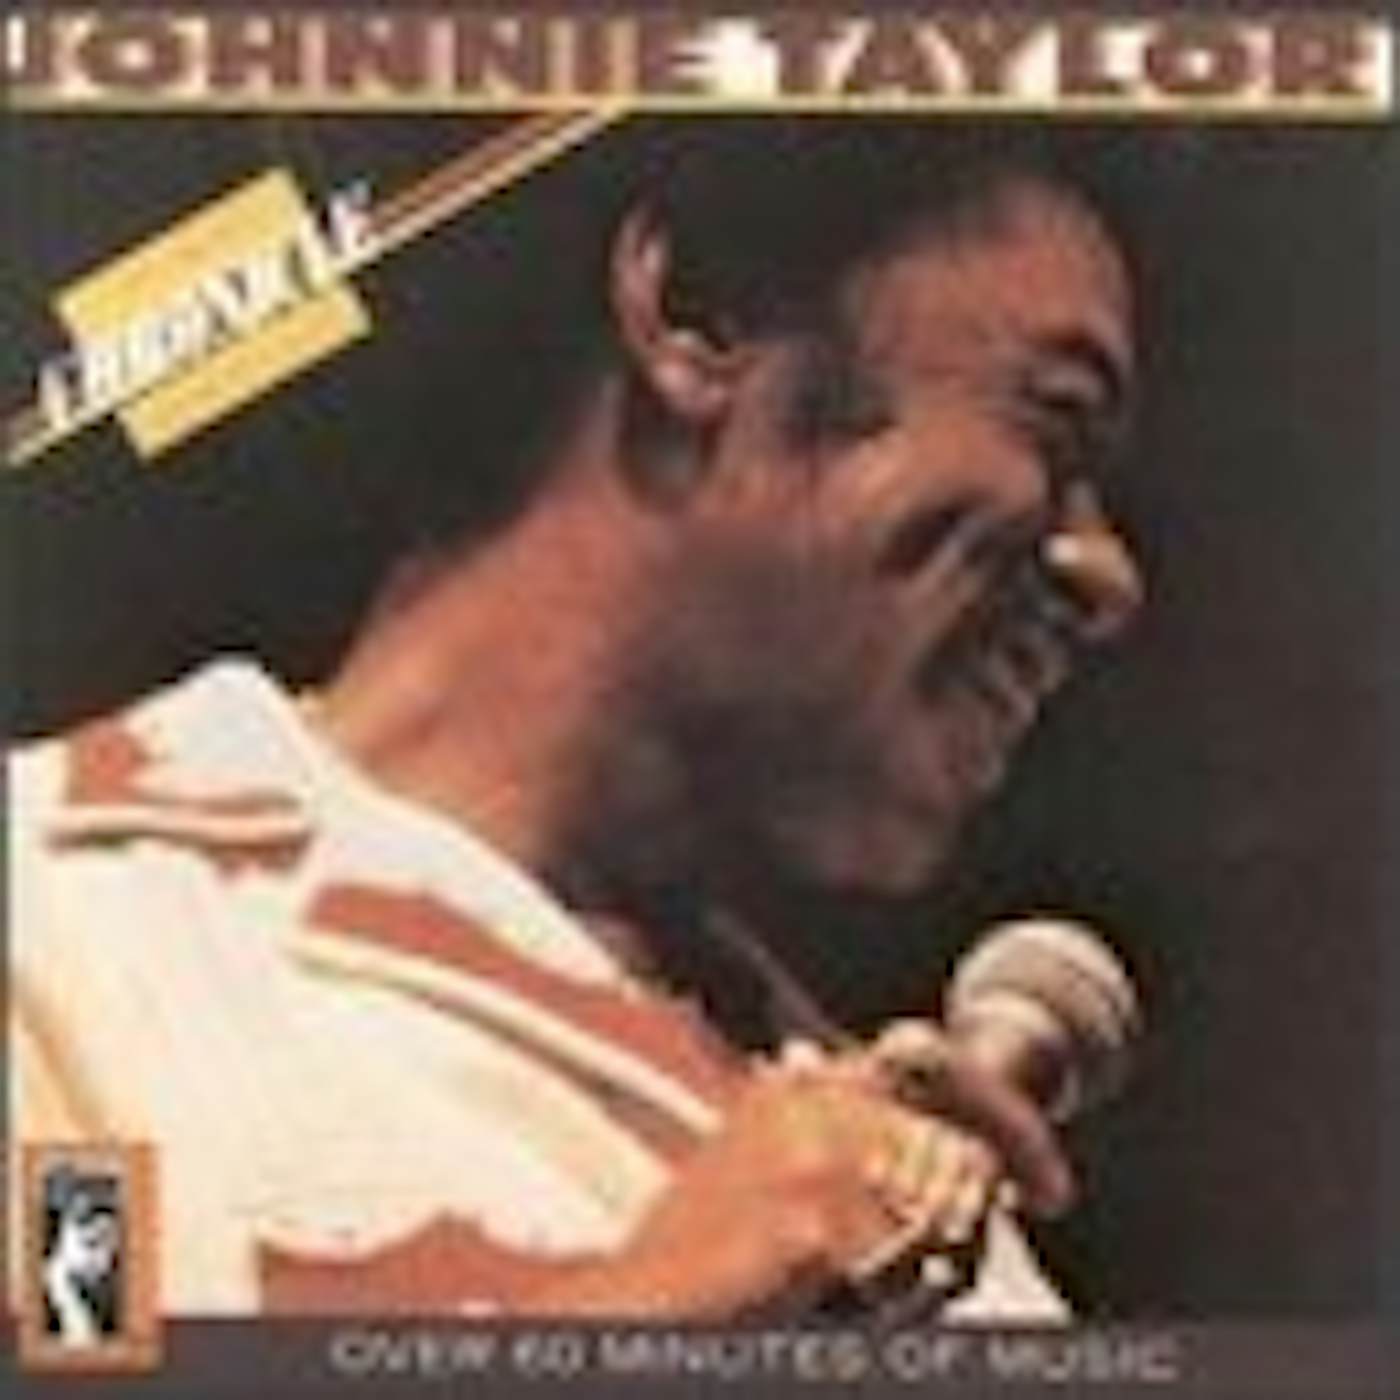 Johnnie Taylor IN CONTROL CD